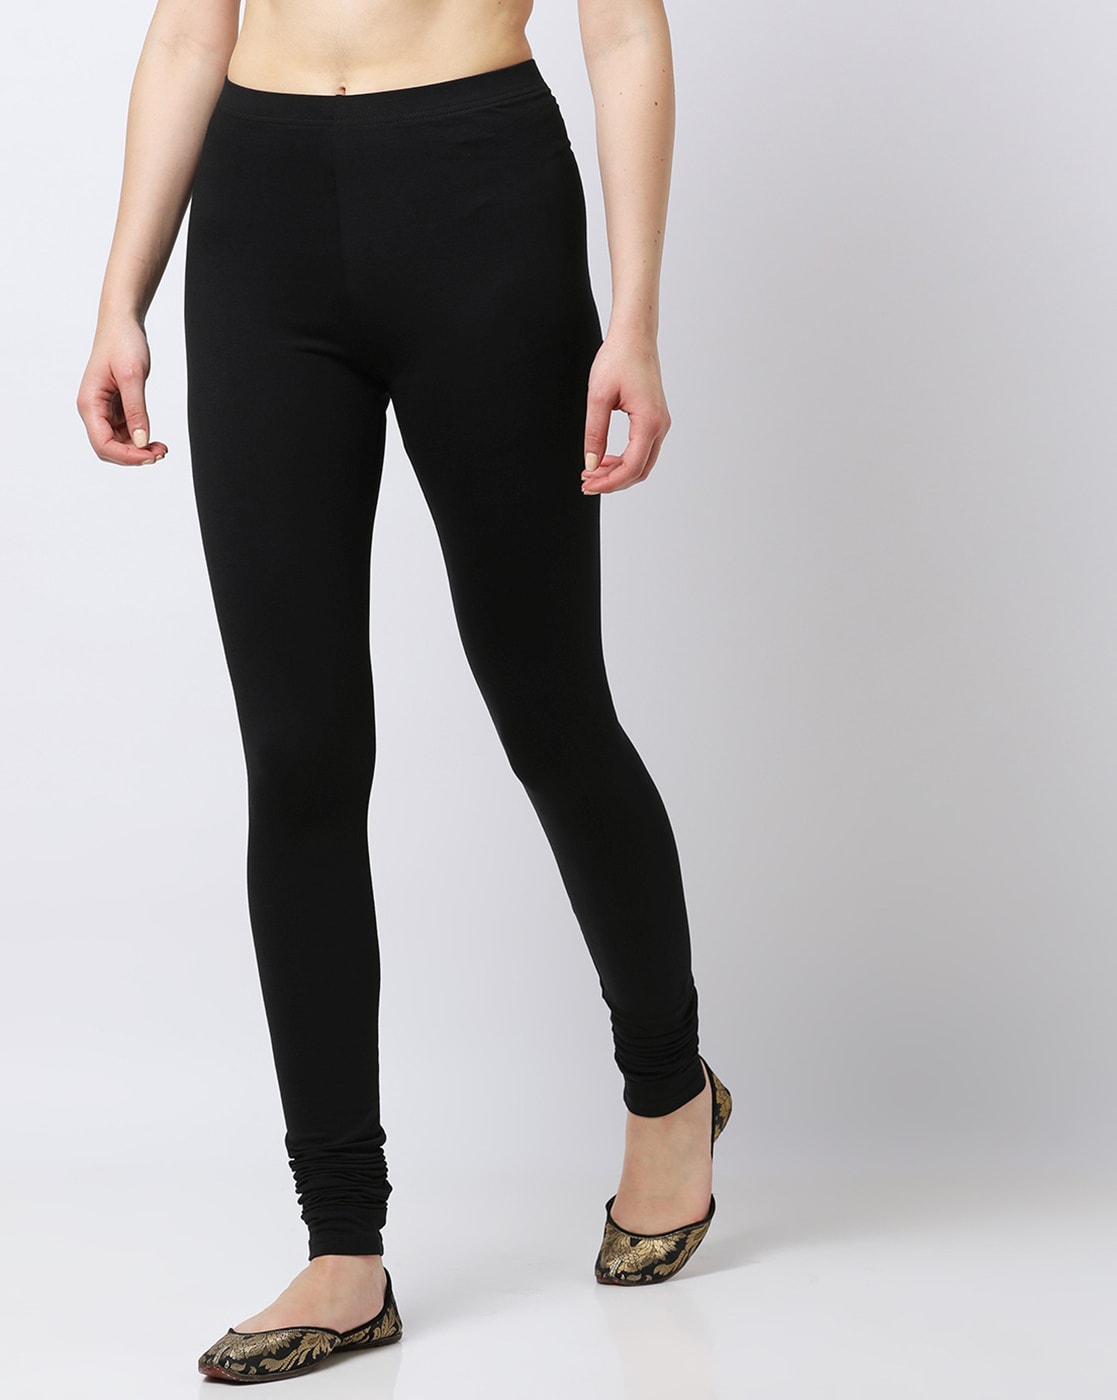 Leggings & Churidars in the color black for Women on sale